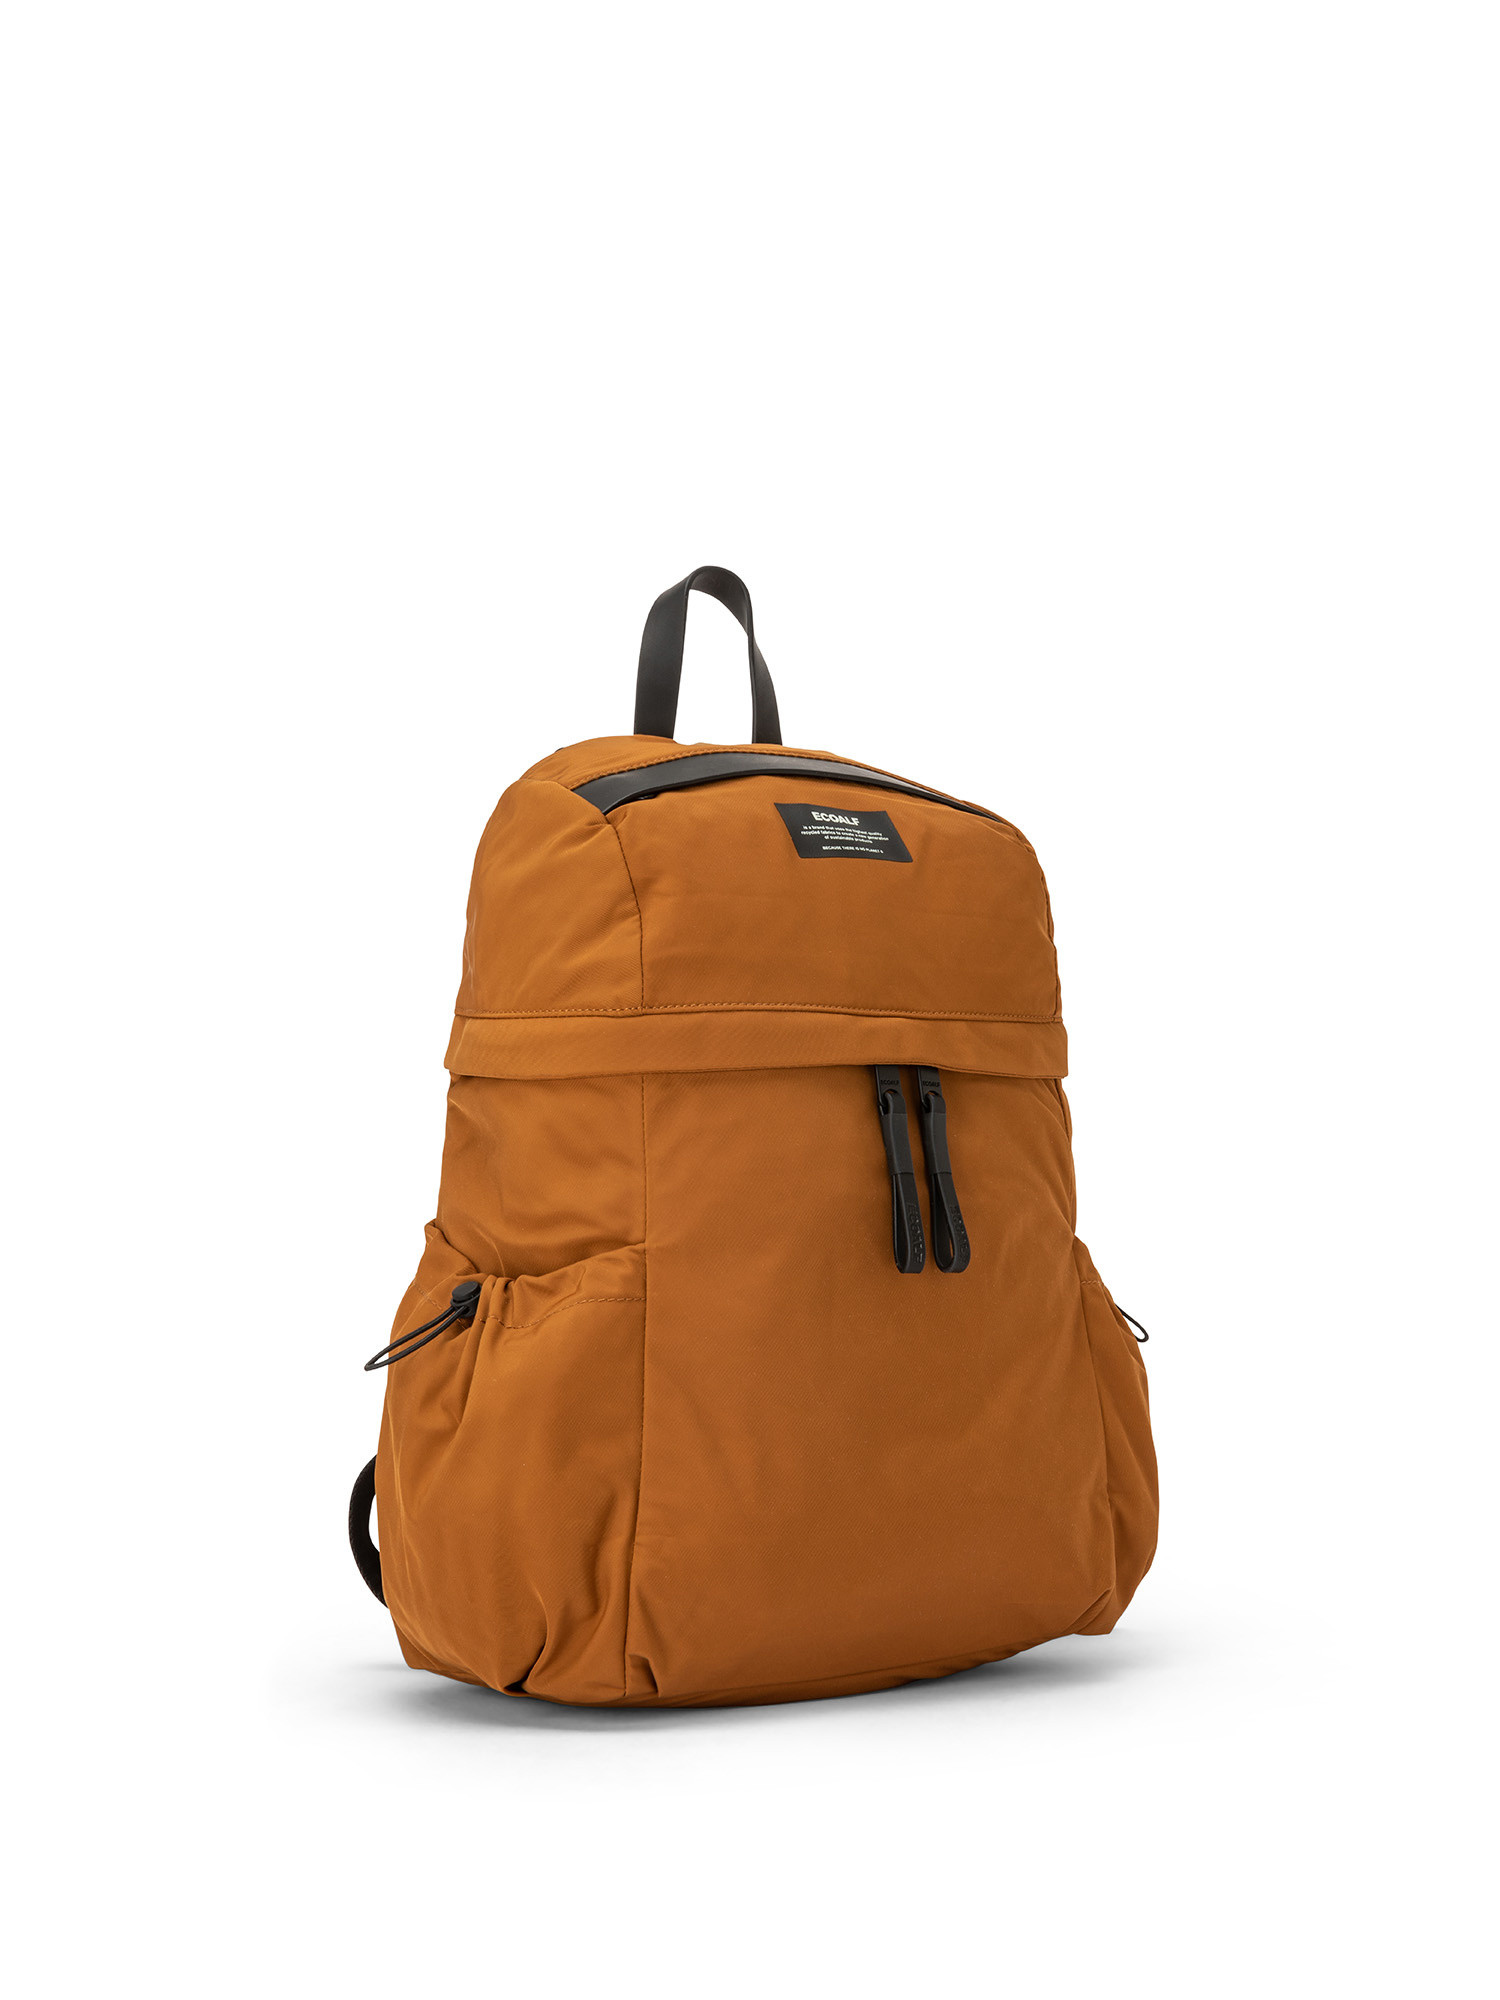 Ecoalf - Waterproof Mom Backpack, Mustard Yellow, large image number 1